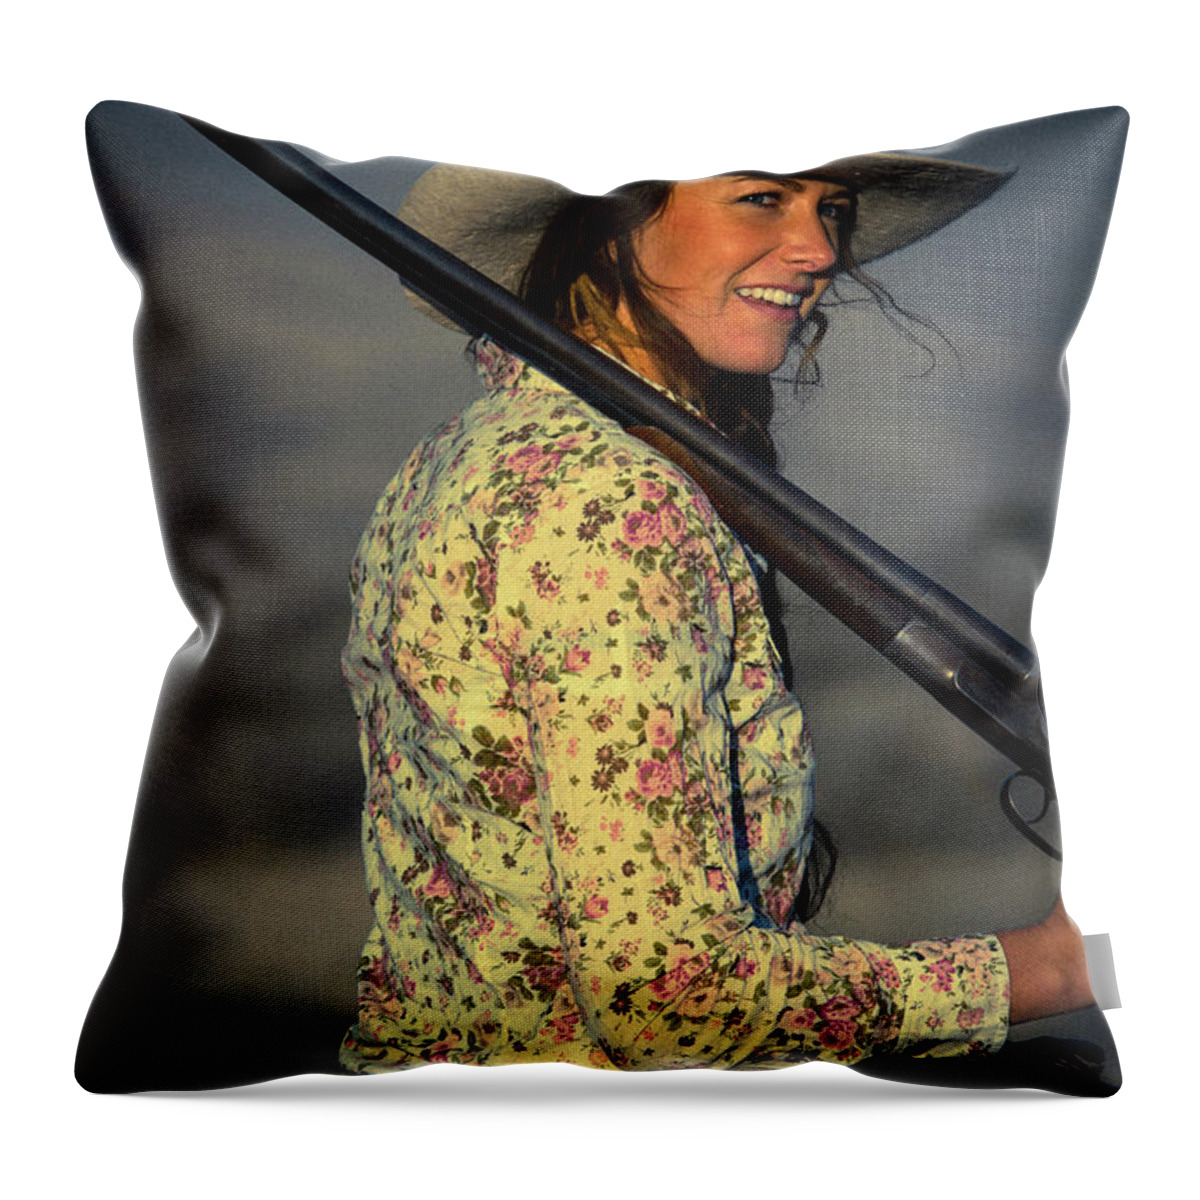 Hannah Throw Pillow featuring the photograph Shotgun Annie Western Art by Kaylyn Franks by Kaylyn Franks